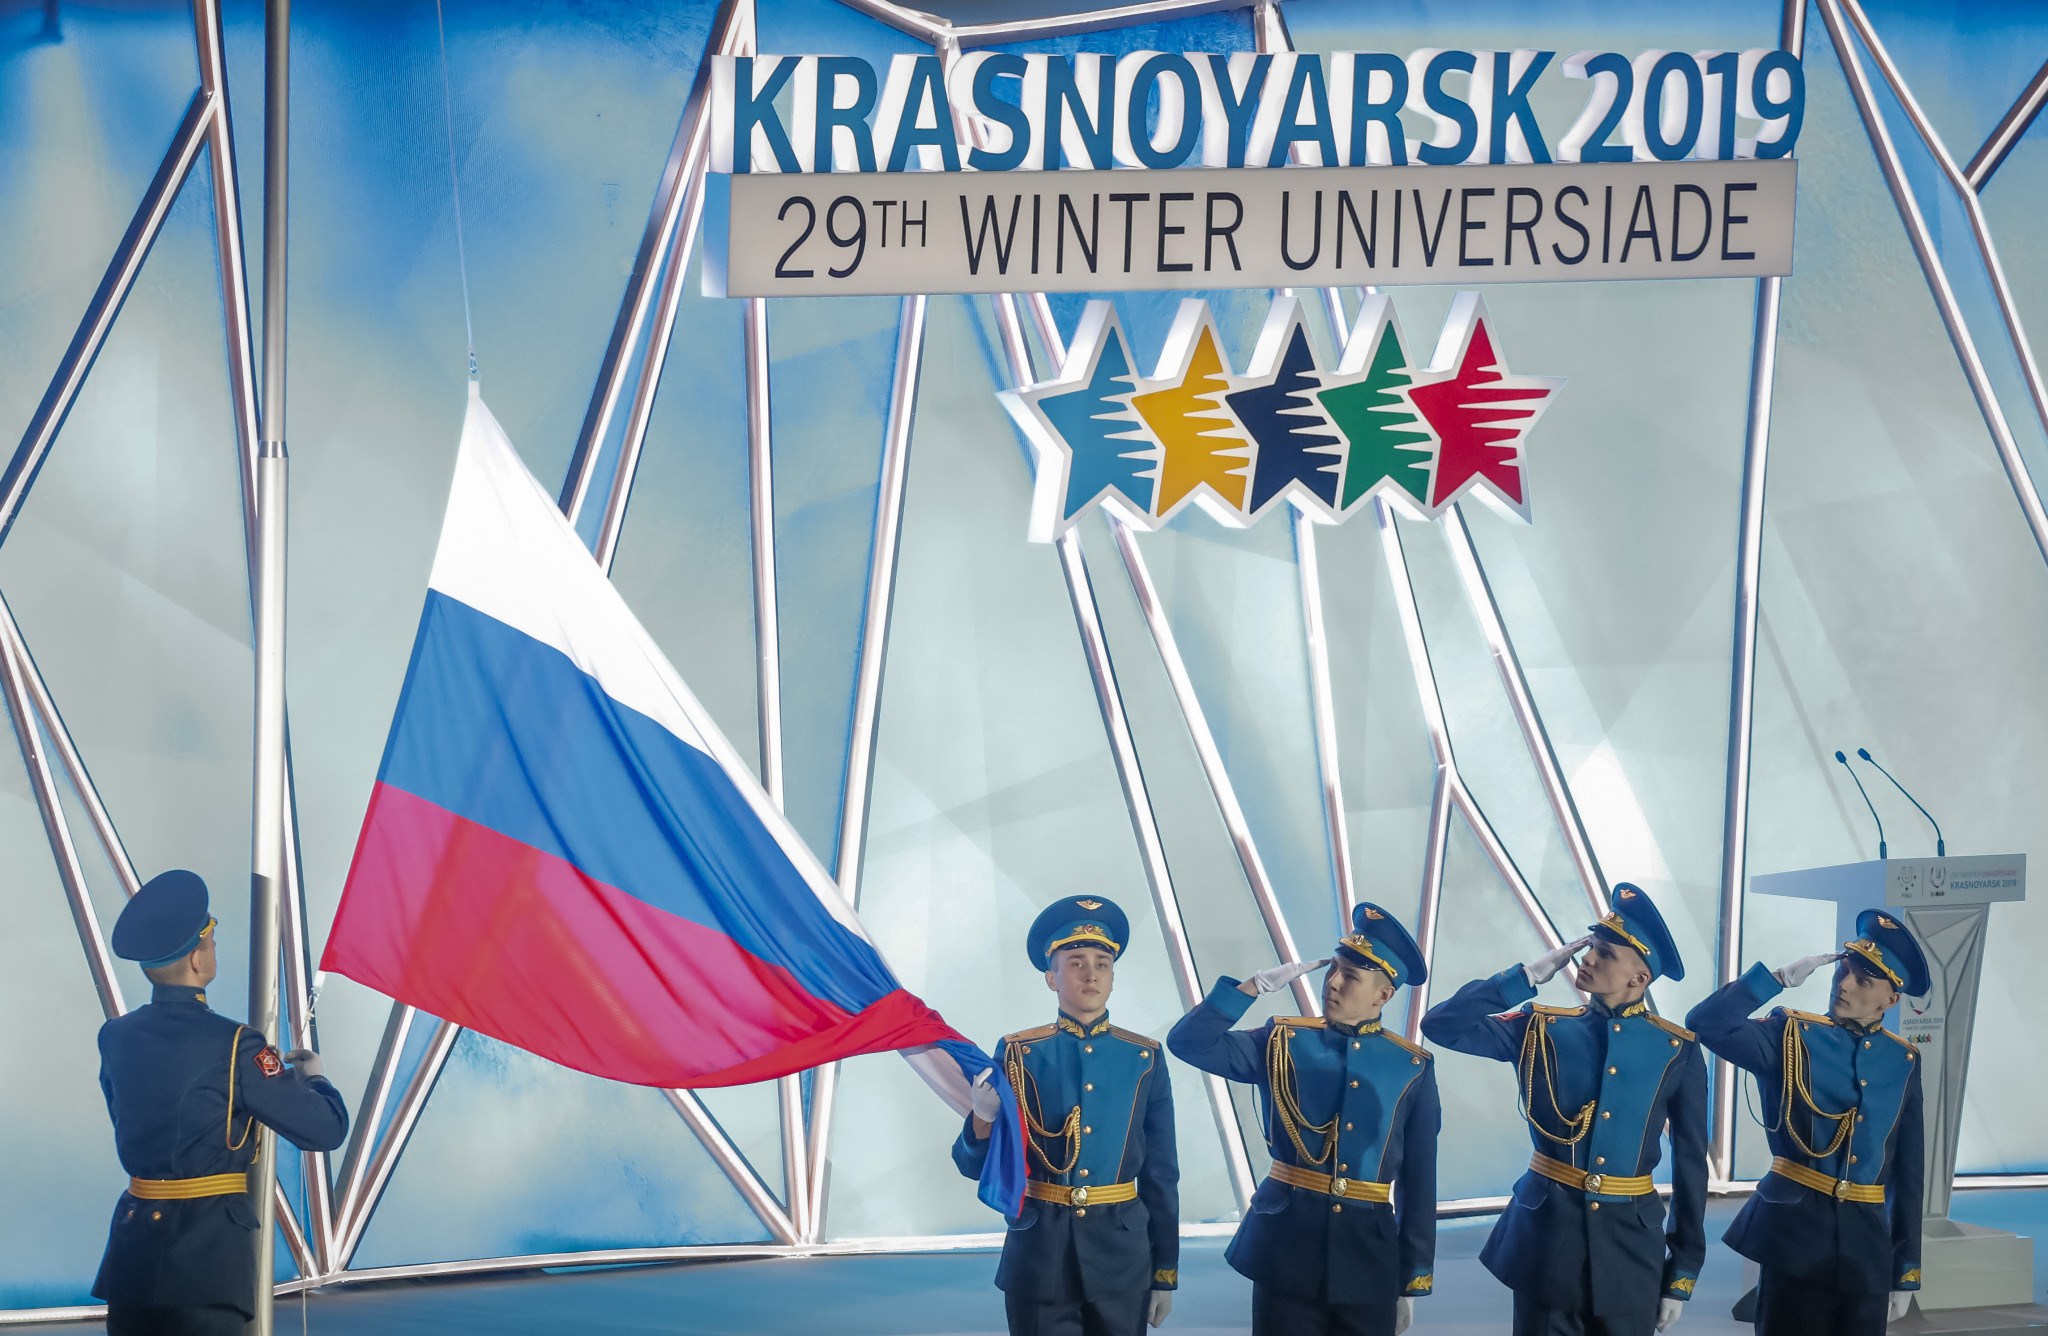 Krasnoyarsk 2019 was the 29th Winter Universiade ©Getty Images